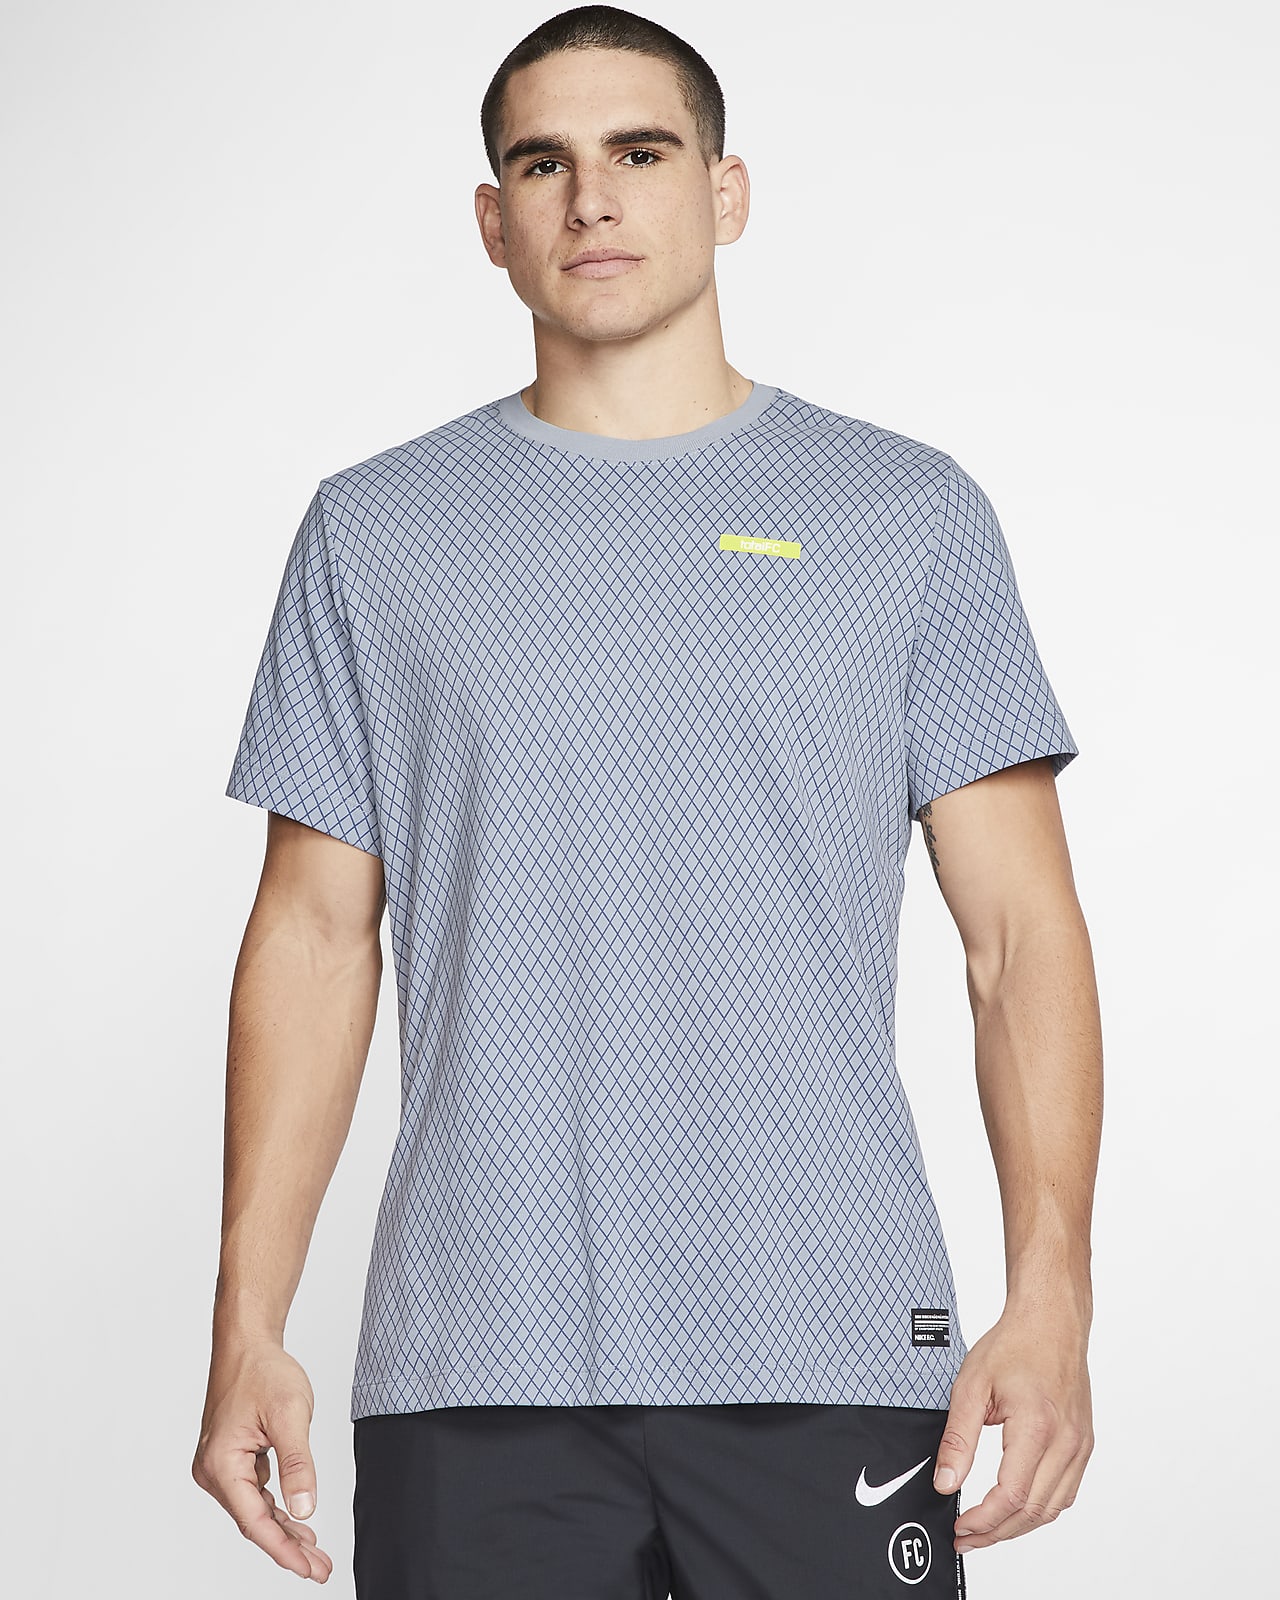 Nike F.C. T-Shirt.